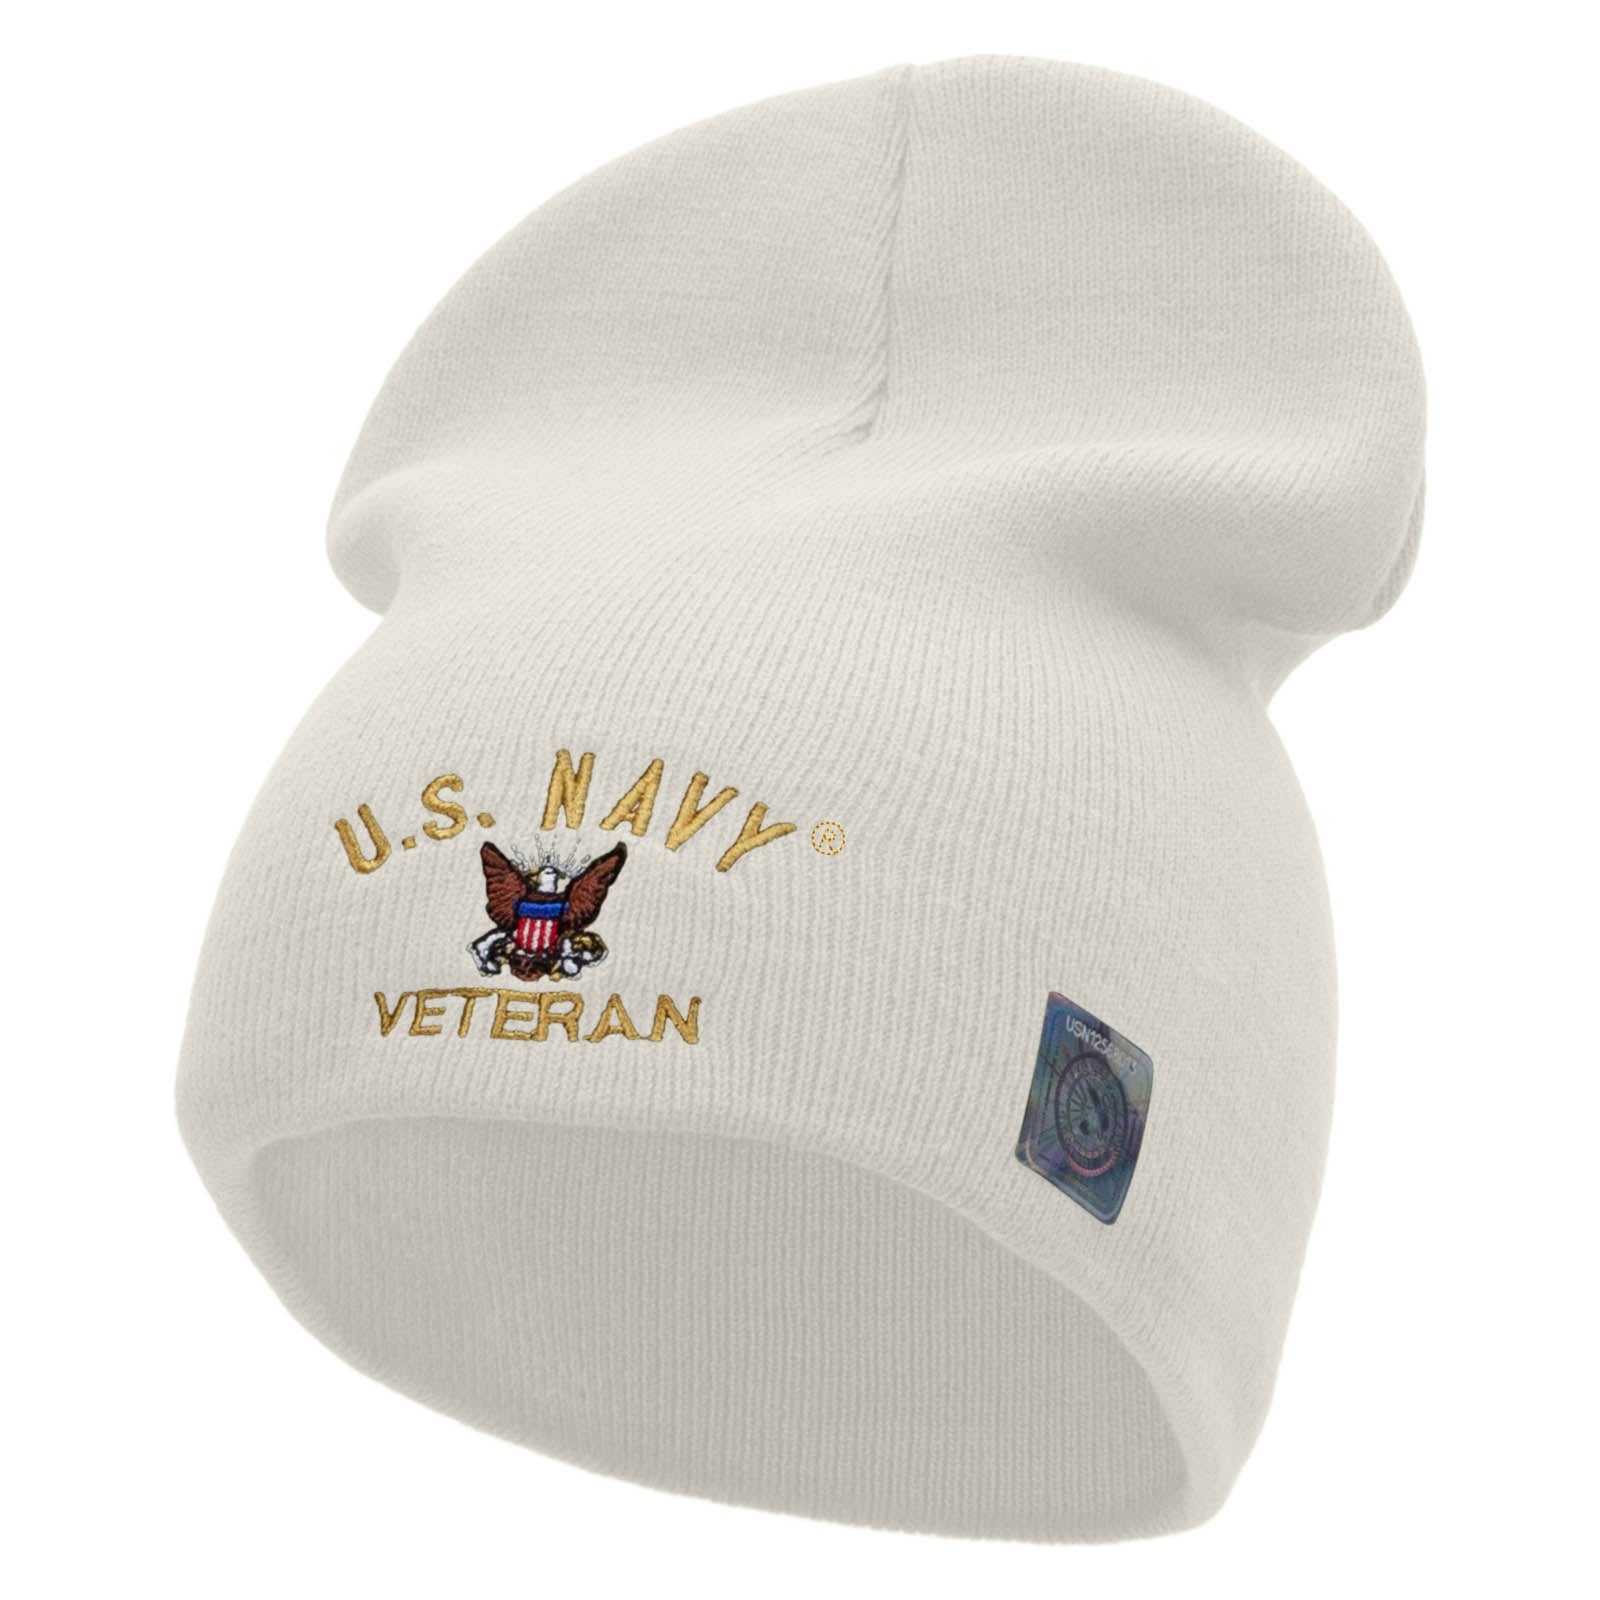 Licensed US Navy Veteran Military Embroidered Short Beanie Made in USA - White OSFM